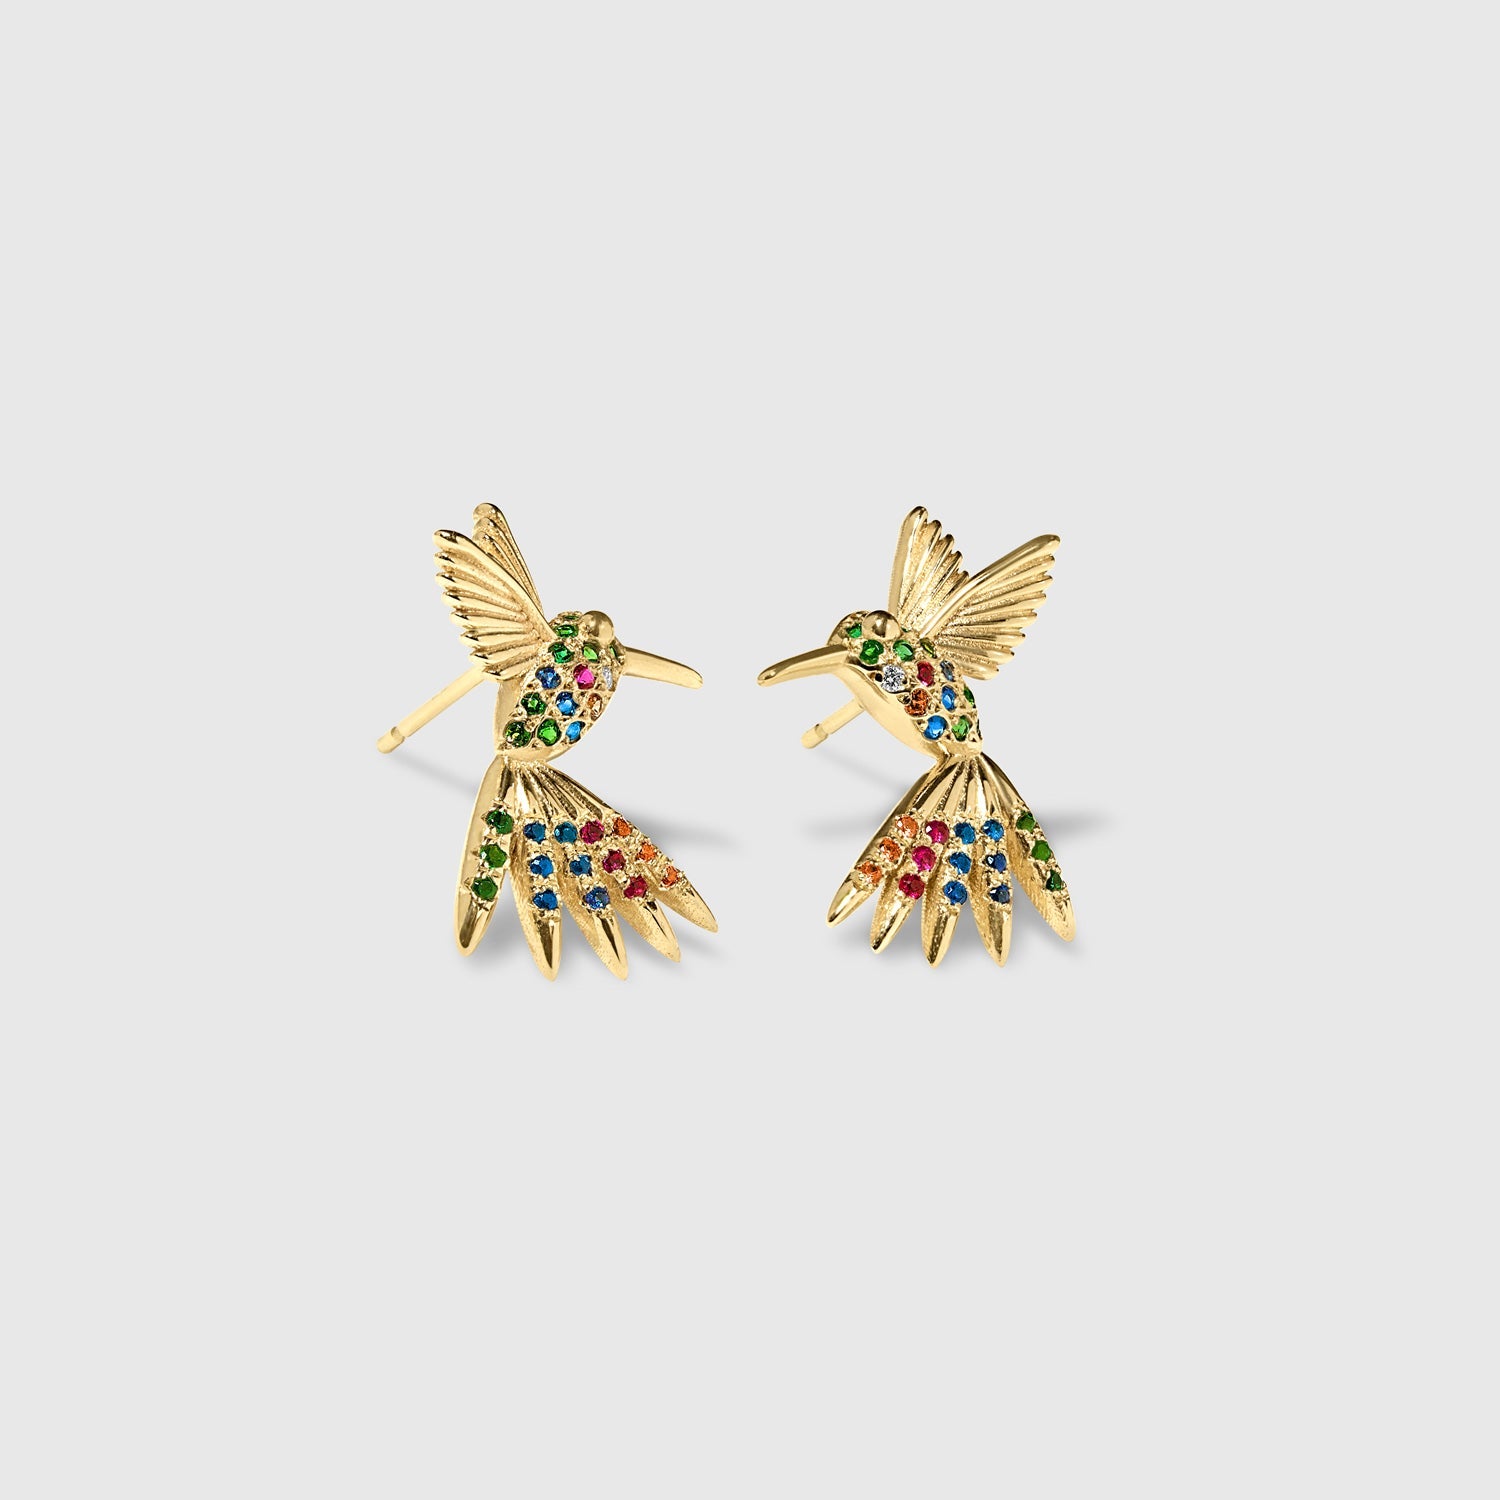 Rainbow Hummingbird Stud Earrings in Solid Gold – The “Humming Beauty” Set - Aurora Laffite Jewelry